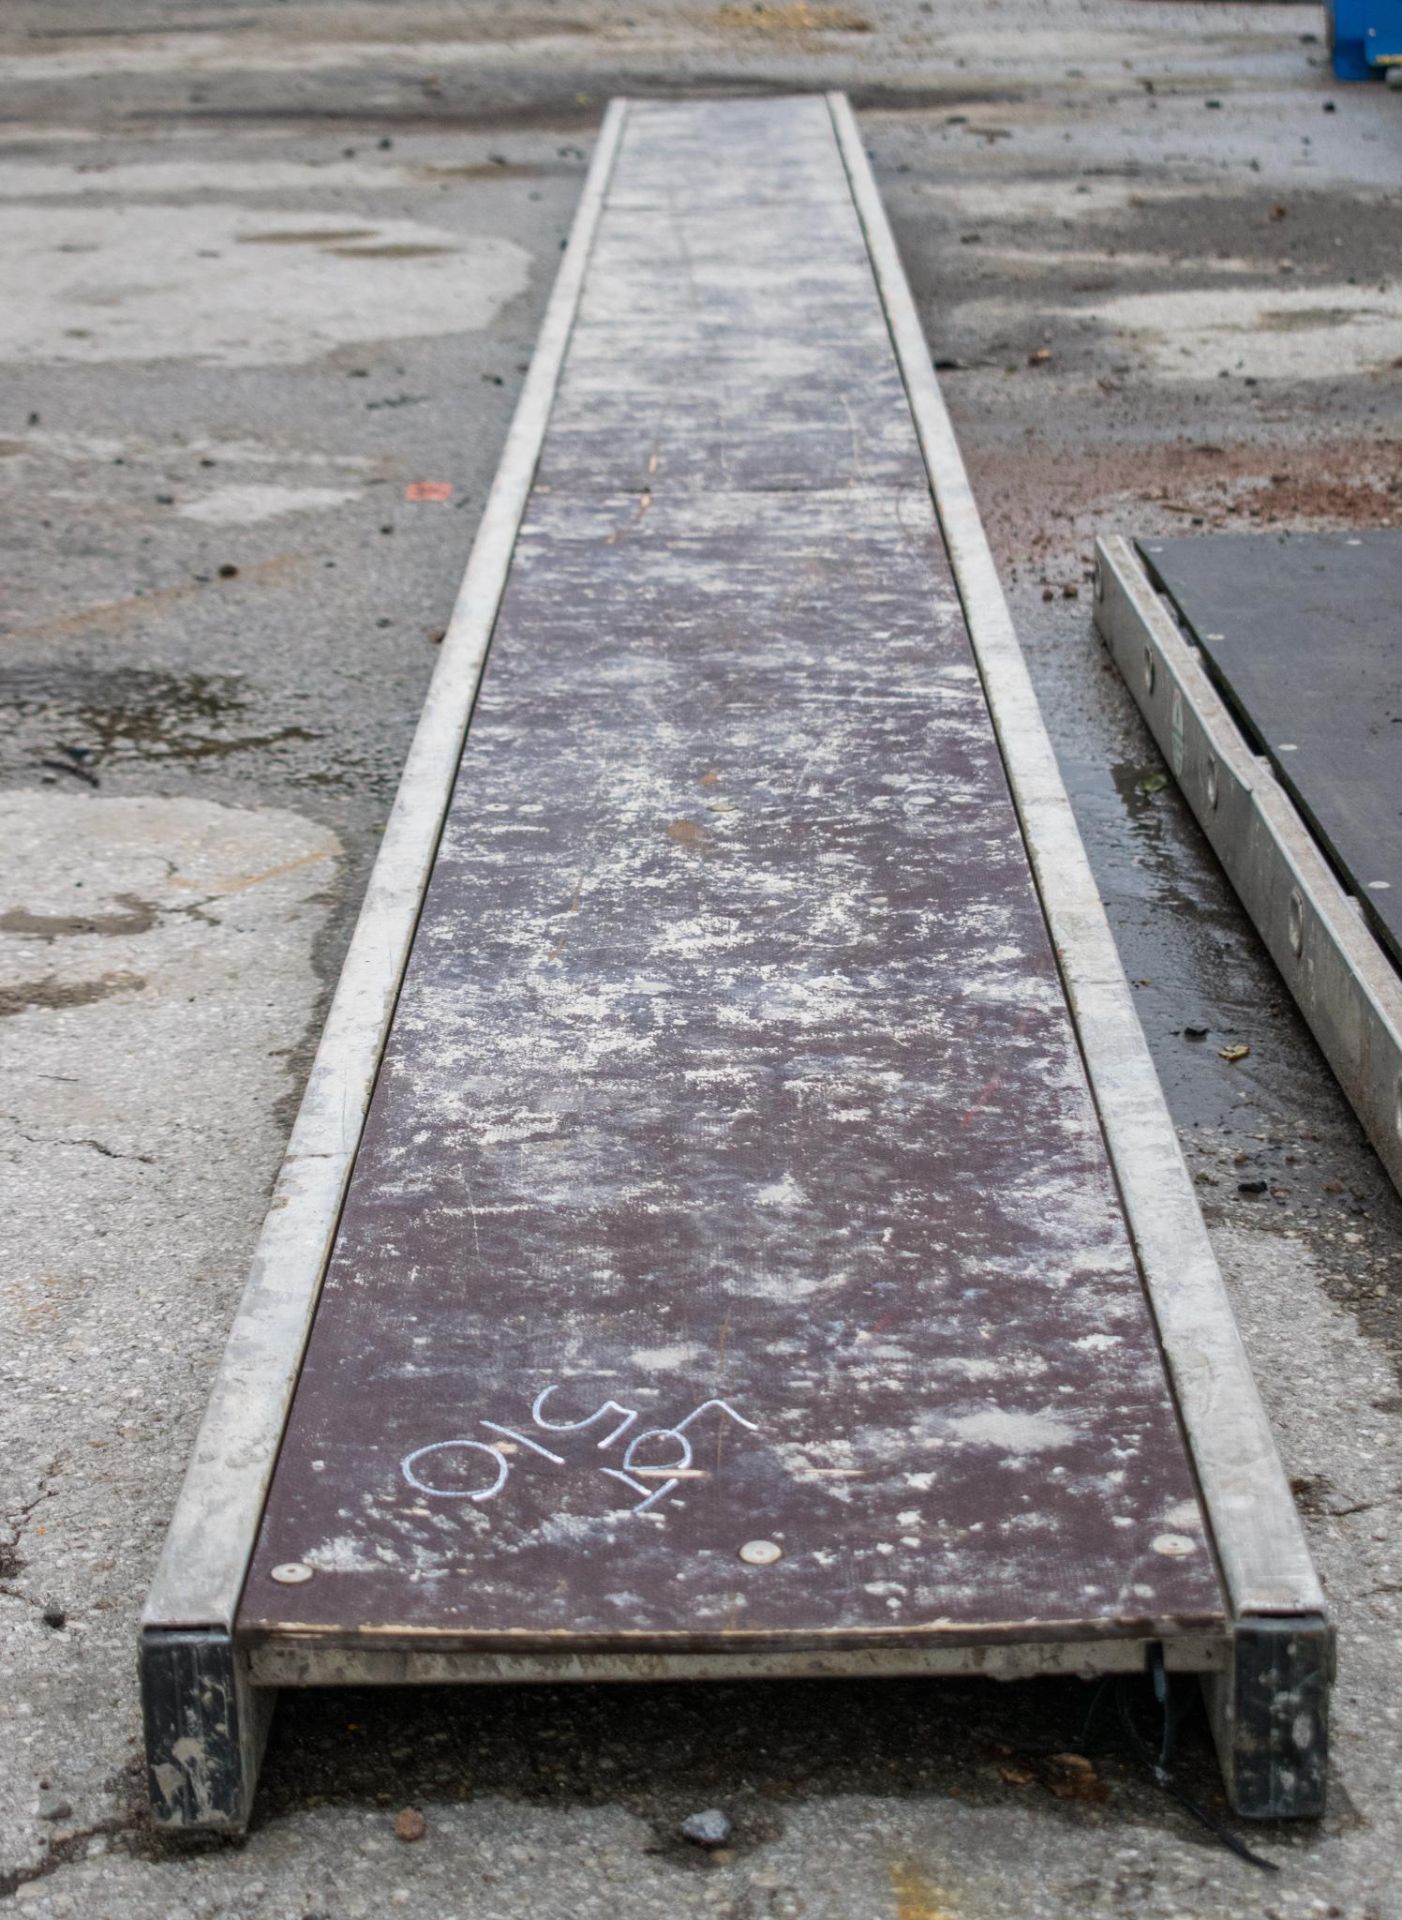 Aluminium staging board approx. 22 foot long